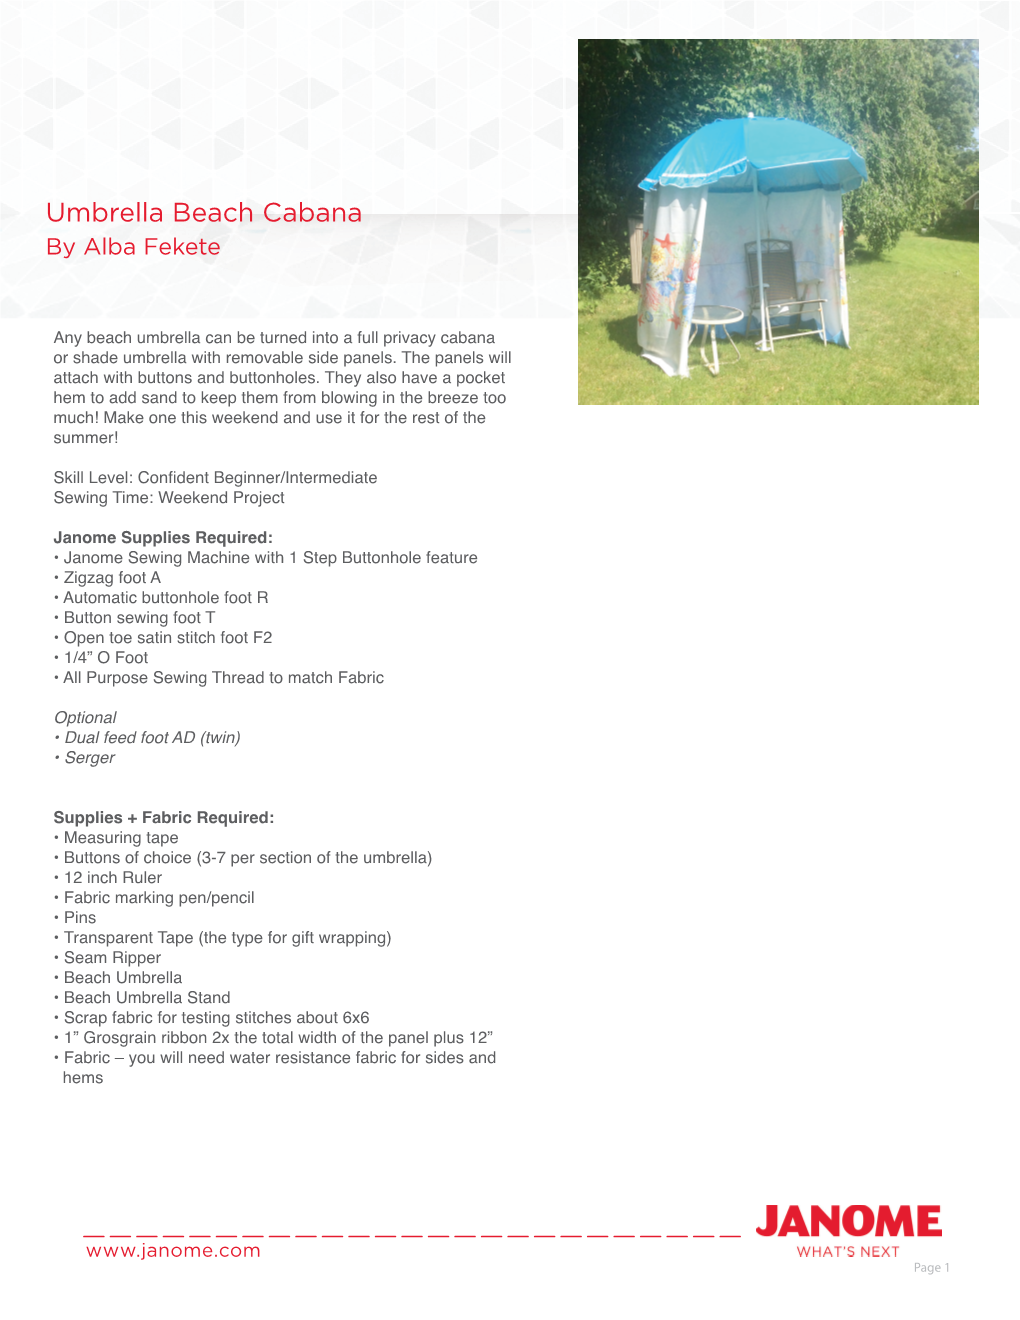 Umbrella Beach Cabana by Alba Fekete